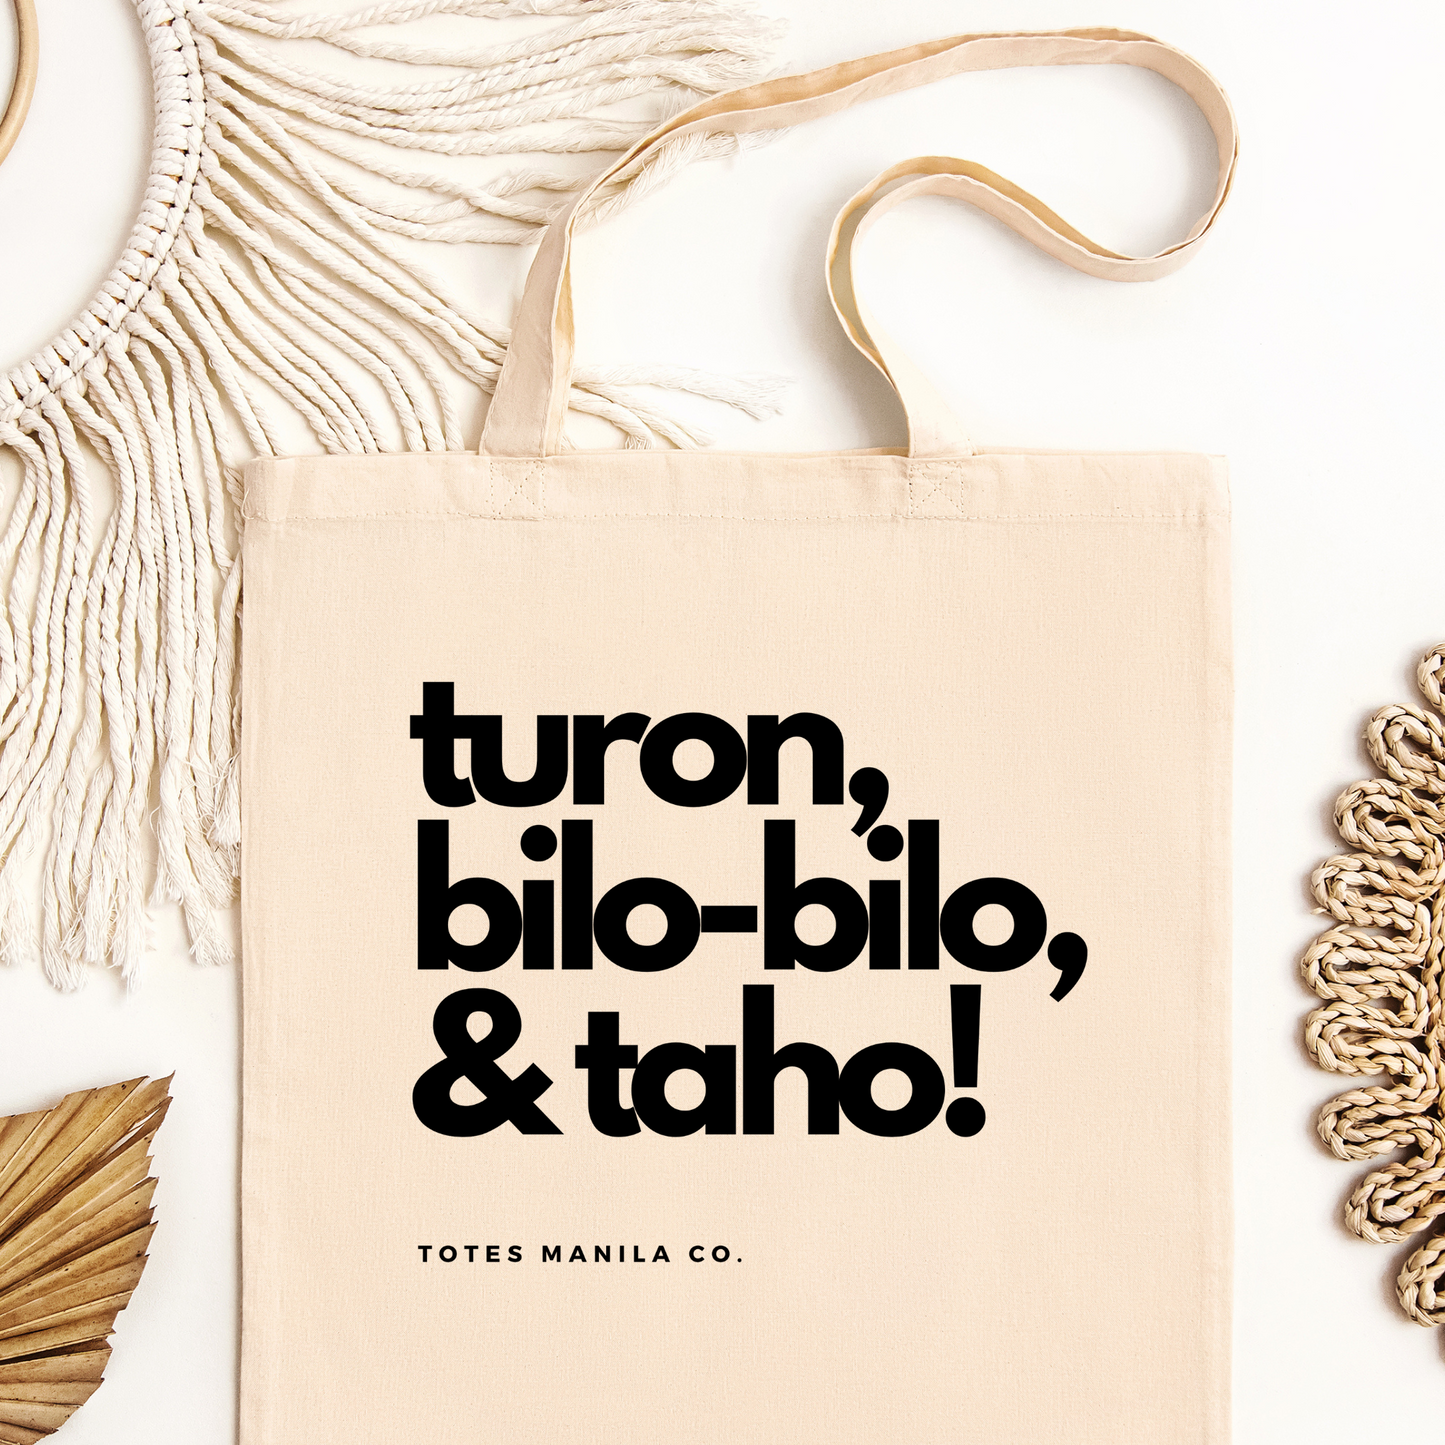 Filipino Food Turon, Bilo-bilo, & Taho! Meryenda Tote Bag main image